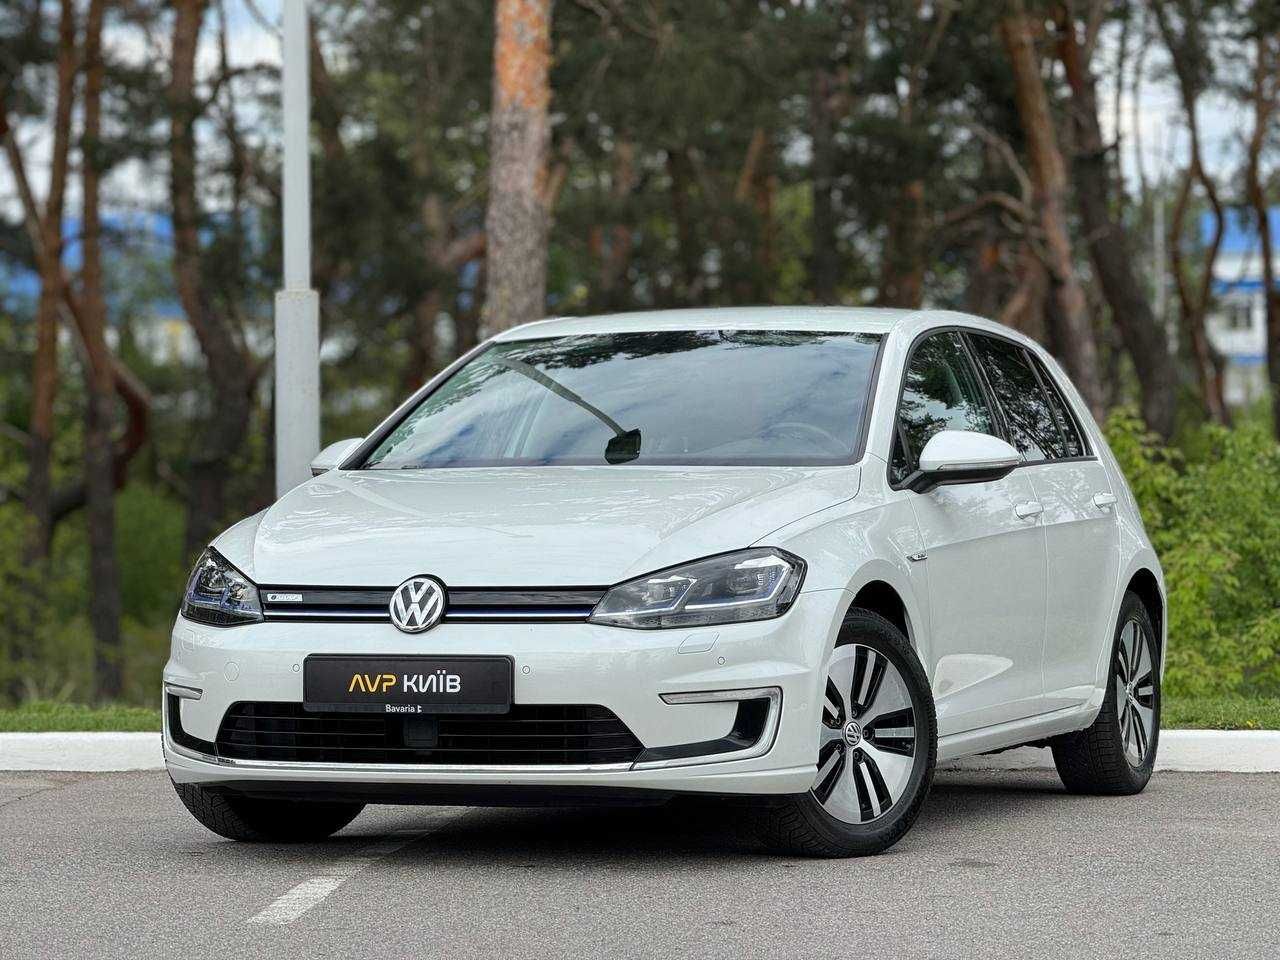 Volkswagen E-Golf 2017 рік, 36 кВт, автомат